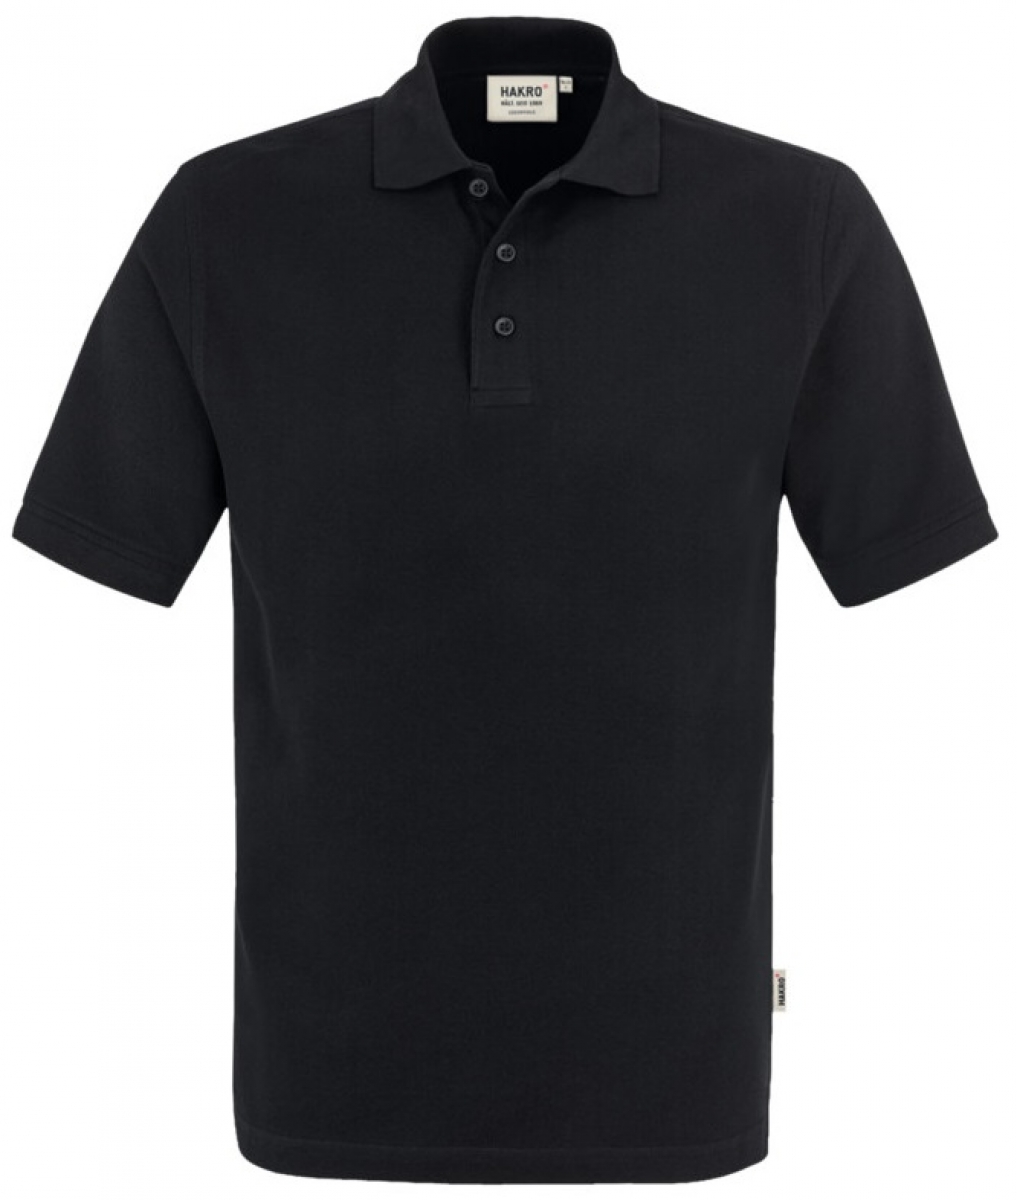 HAKRO-Worker-Shirts, Poloshirt Classic, schwarz